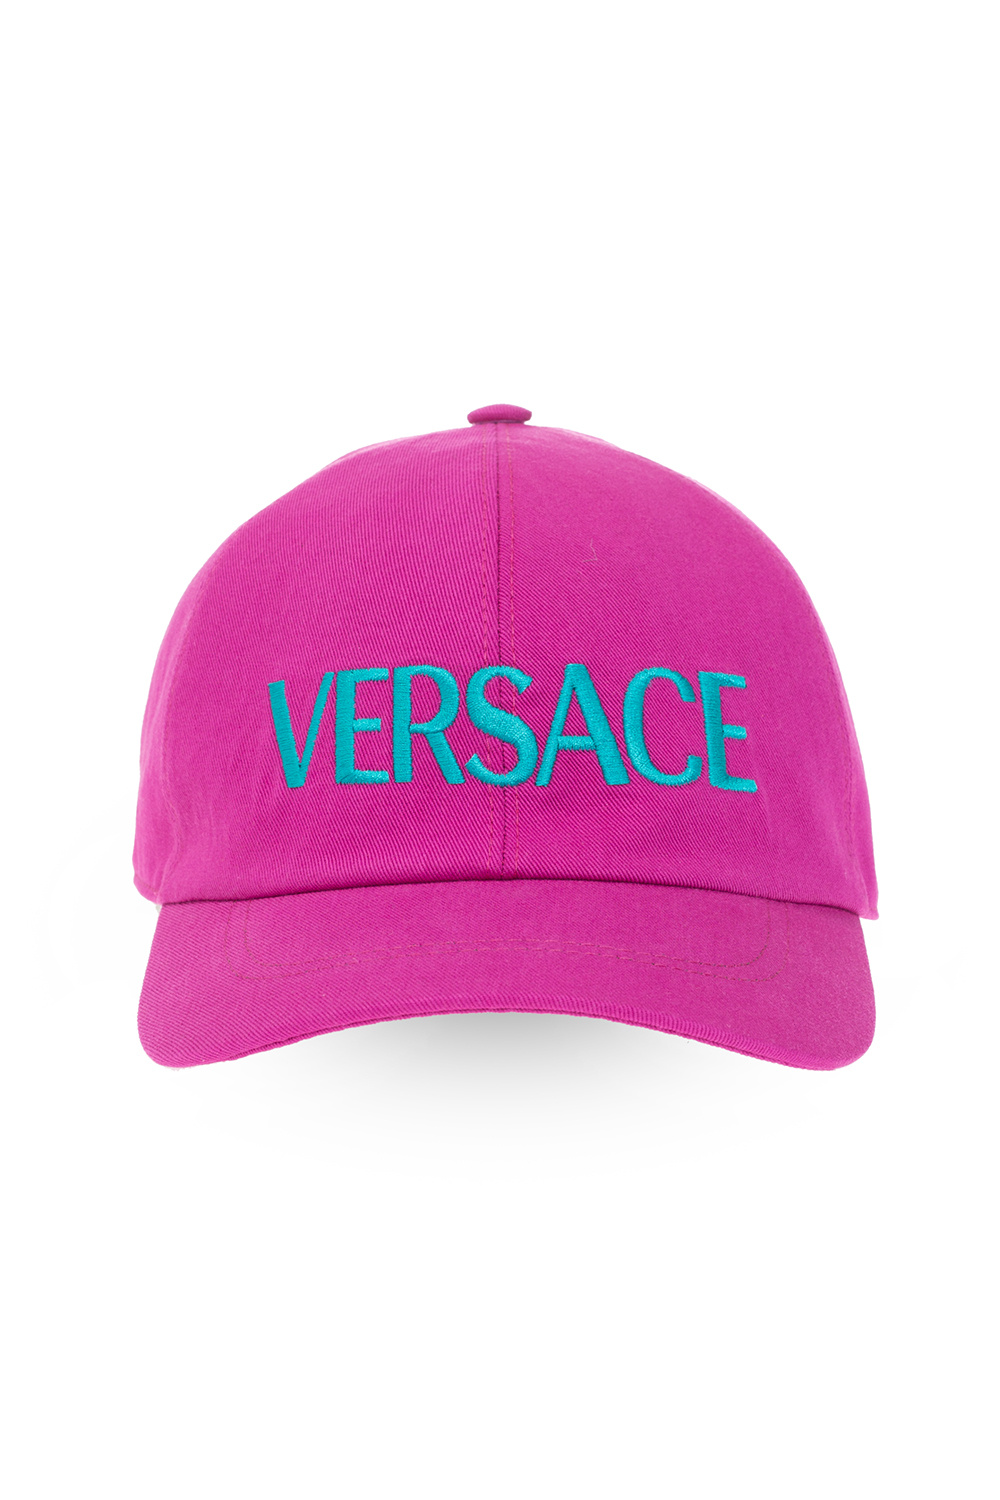 Versace Men's Union Standard Walleye Skeleton Trucker Adjustable Hat